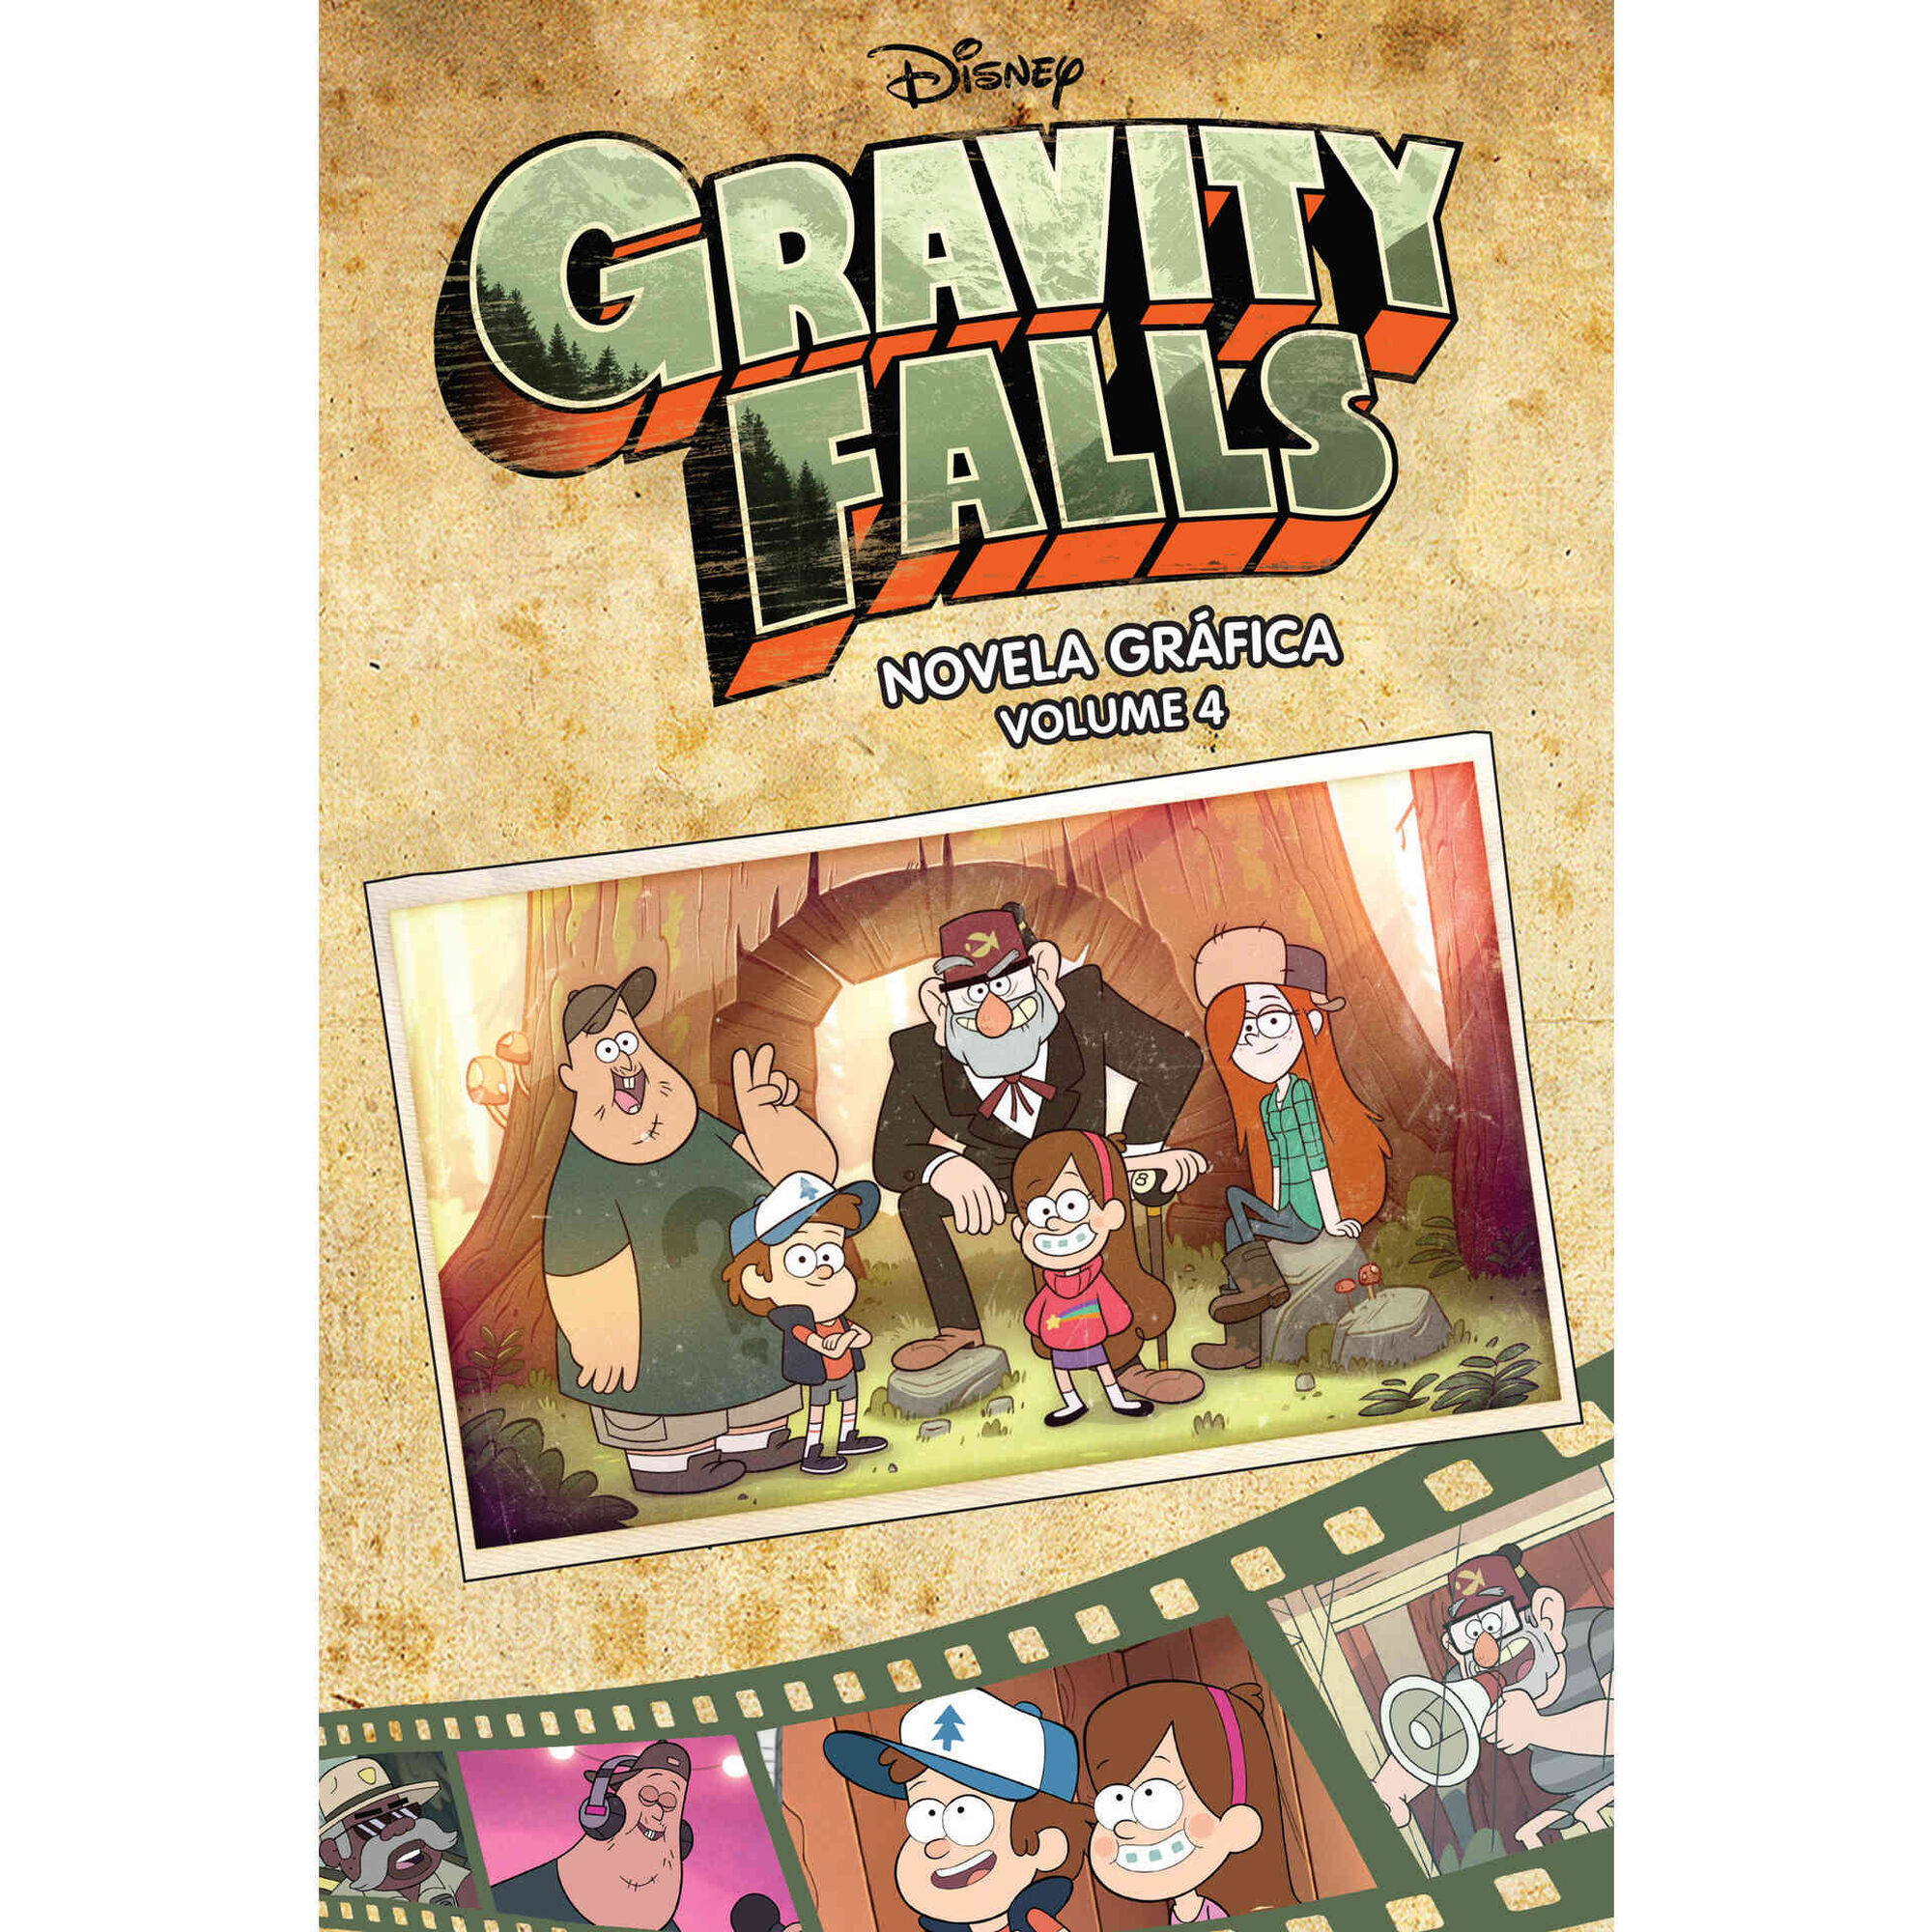 Gravity Falls - Novela Gráfica (volume 4)